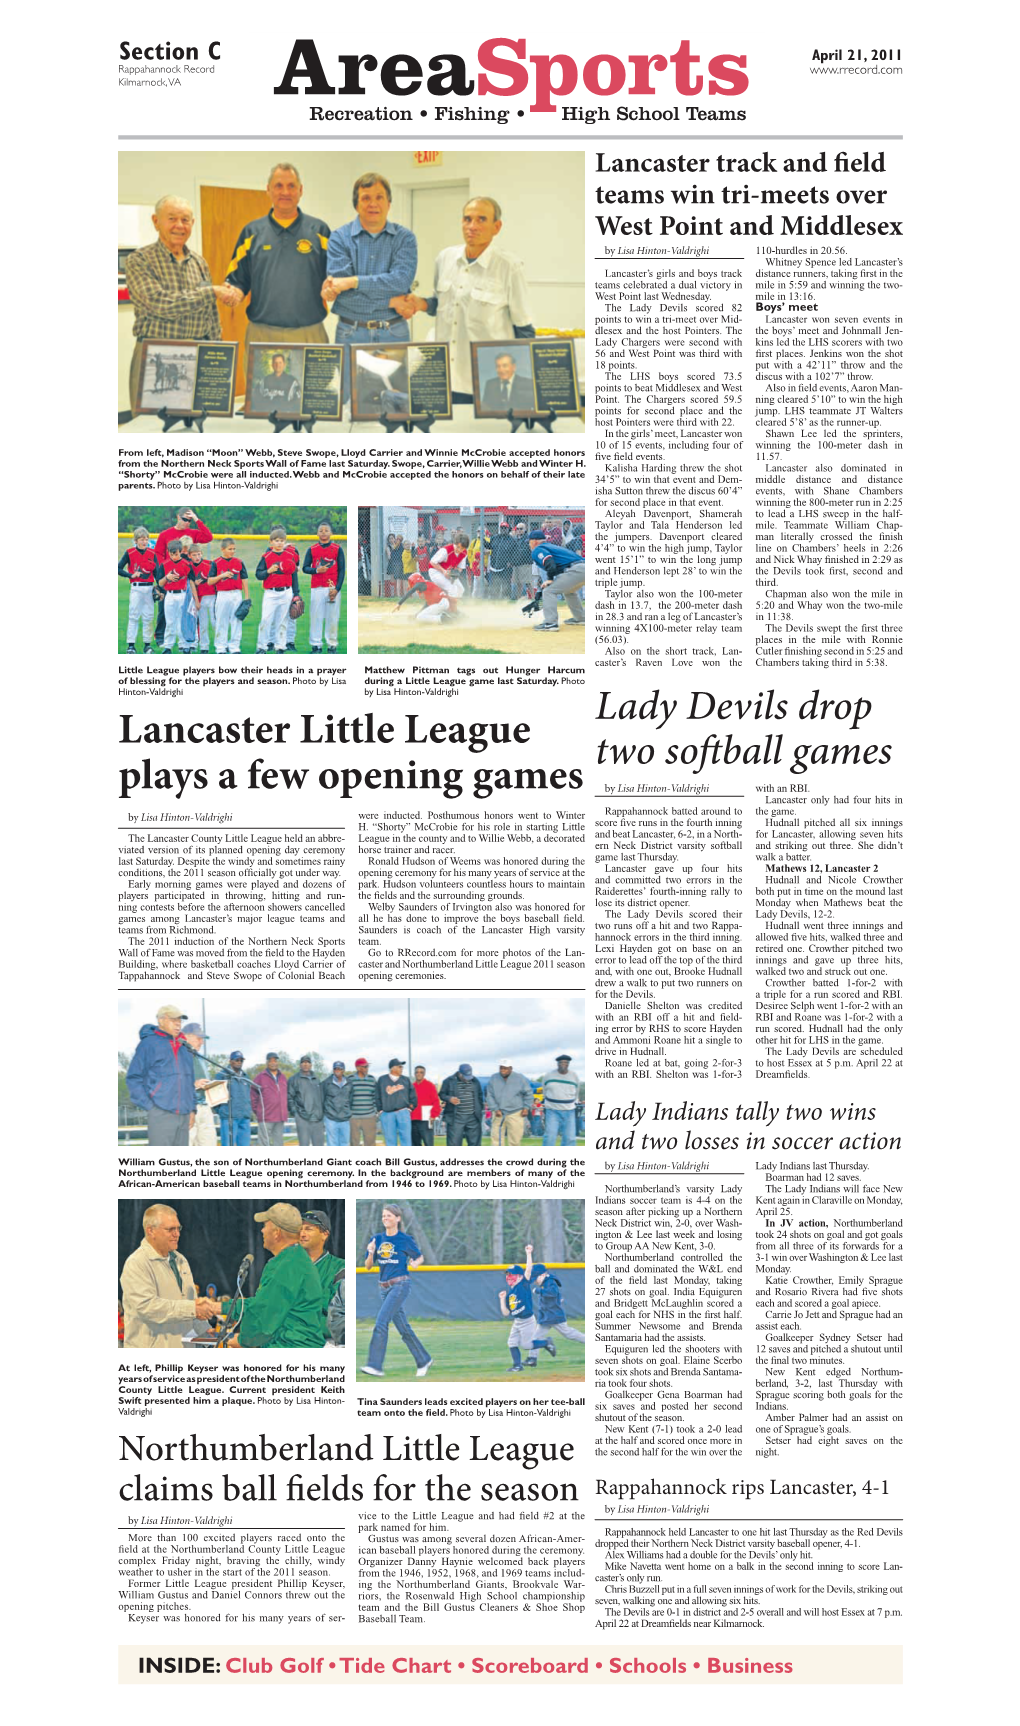 Lancaster Little League Plays a Few Opening Games